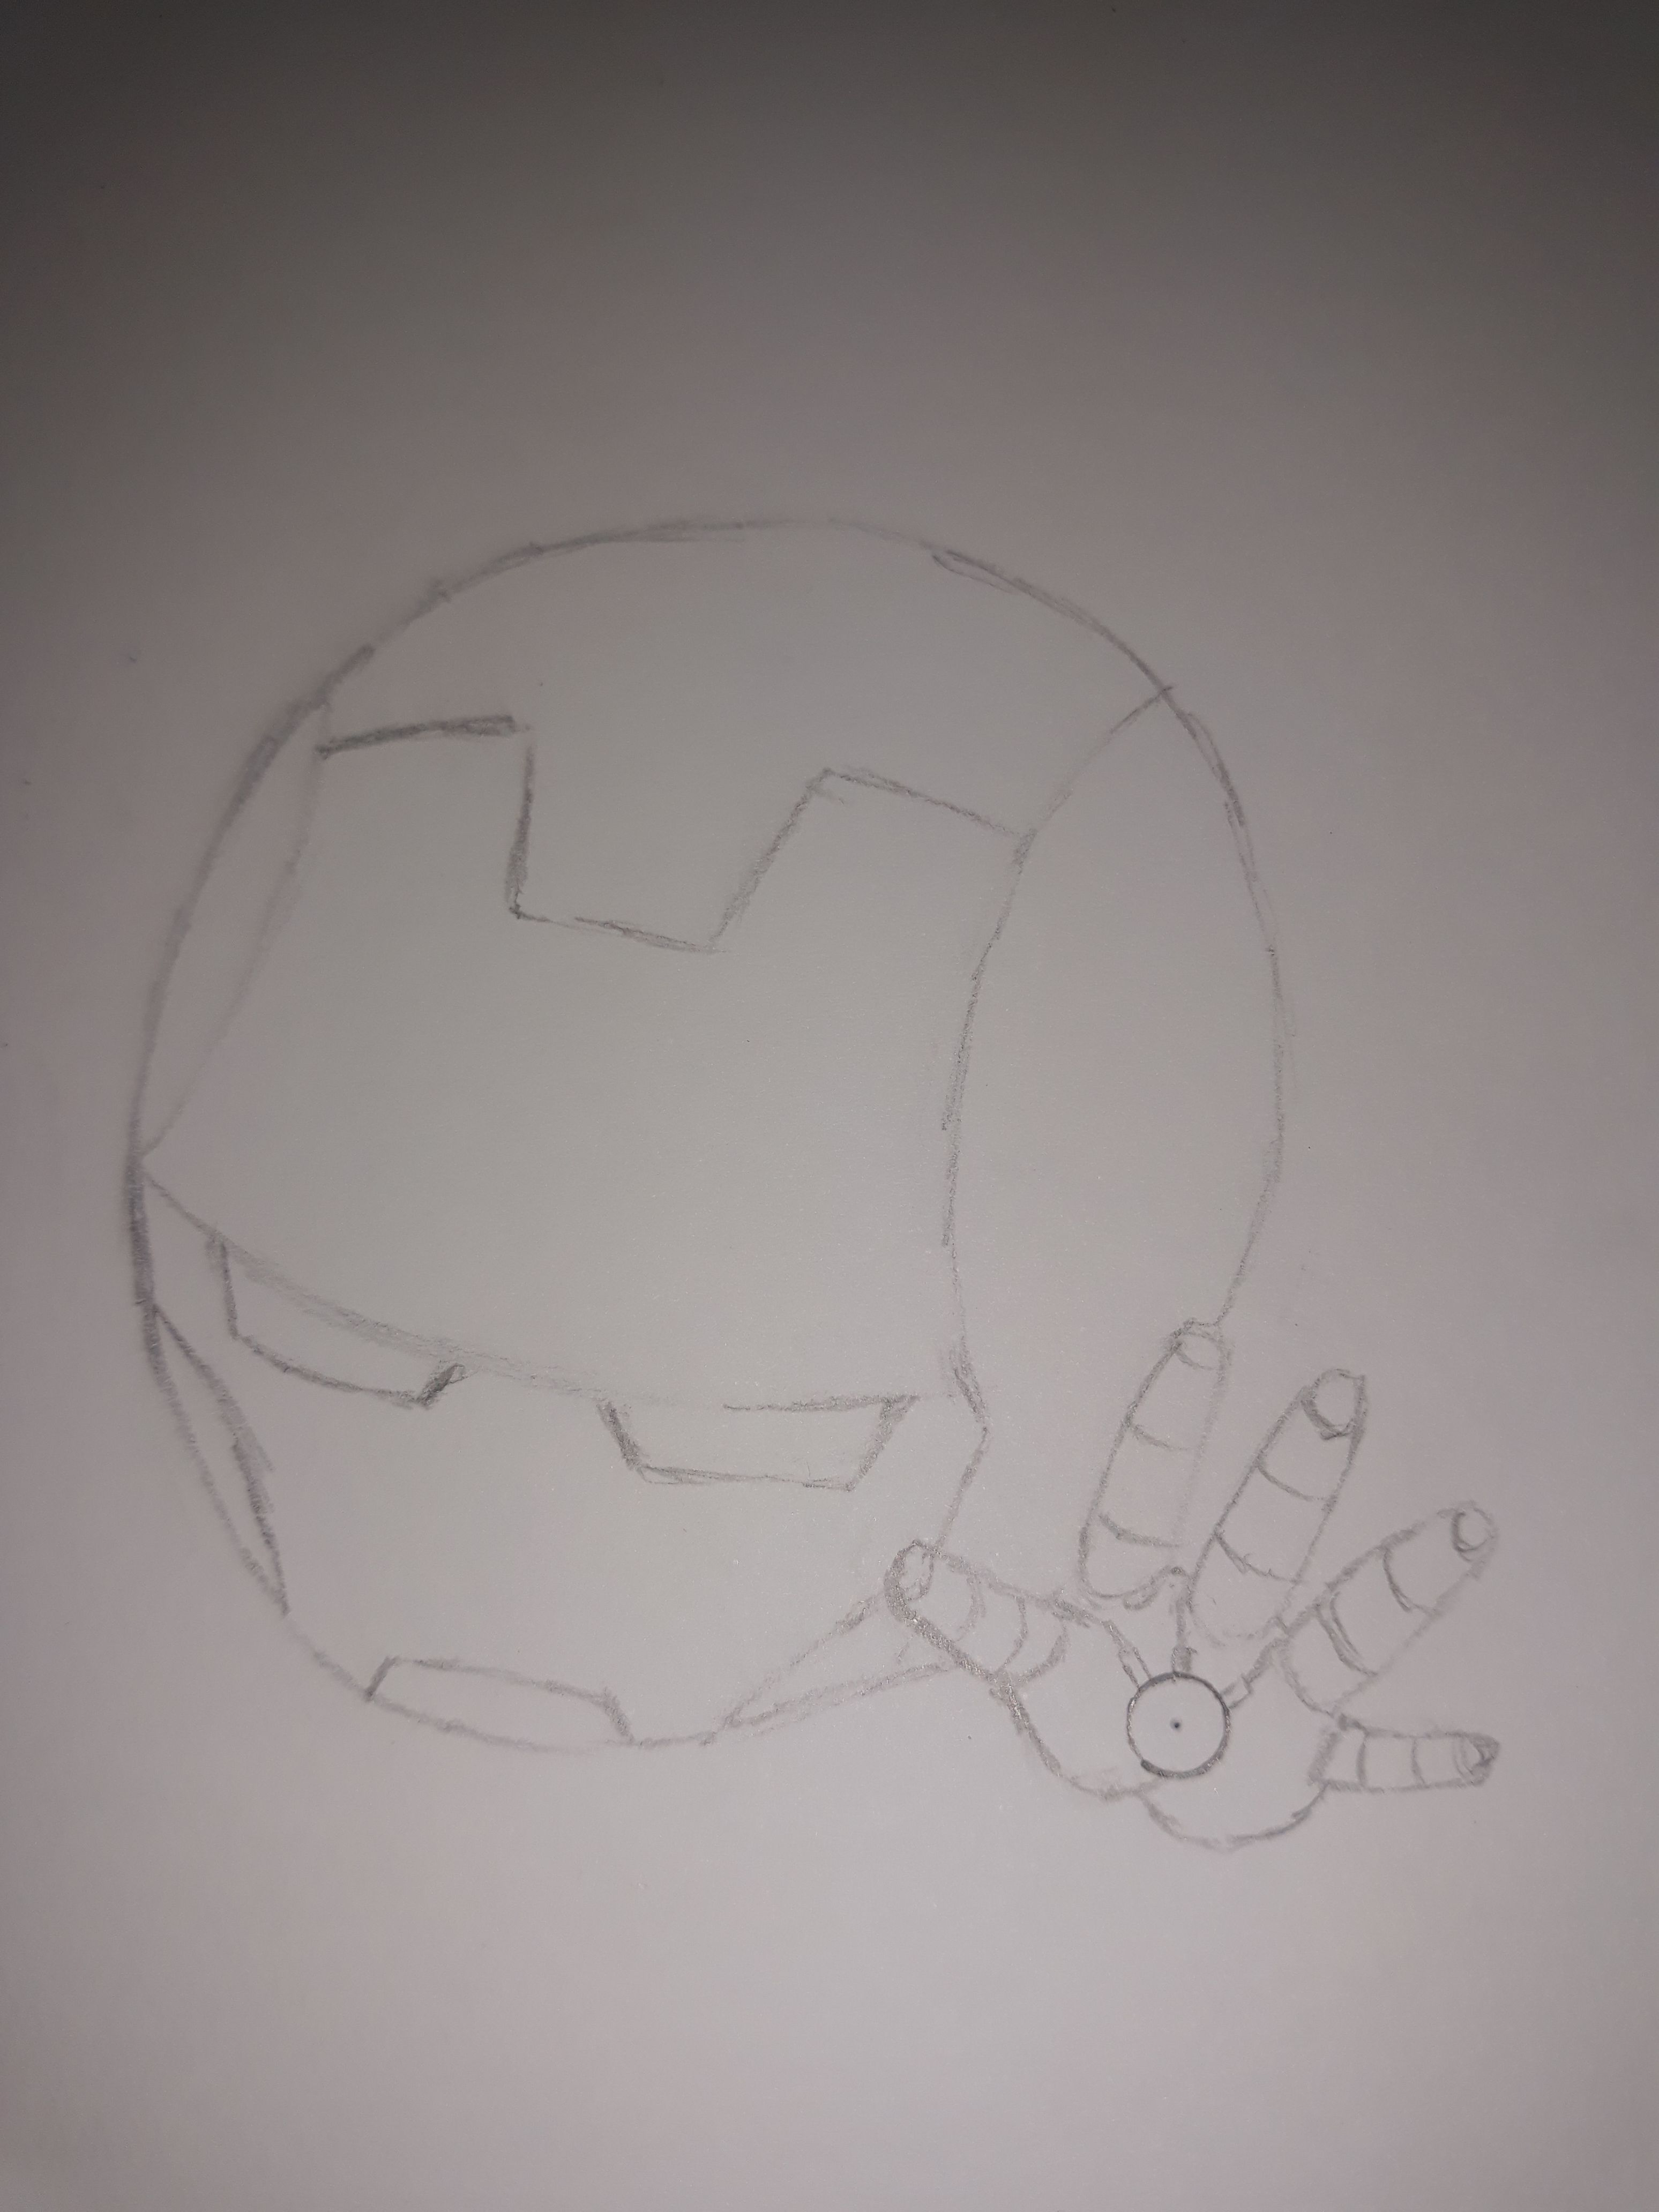 How to Draw Iron Man step by step Chibi Marvel Superhero - video Dailymotion